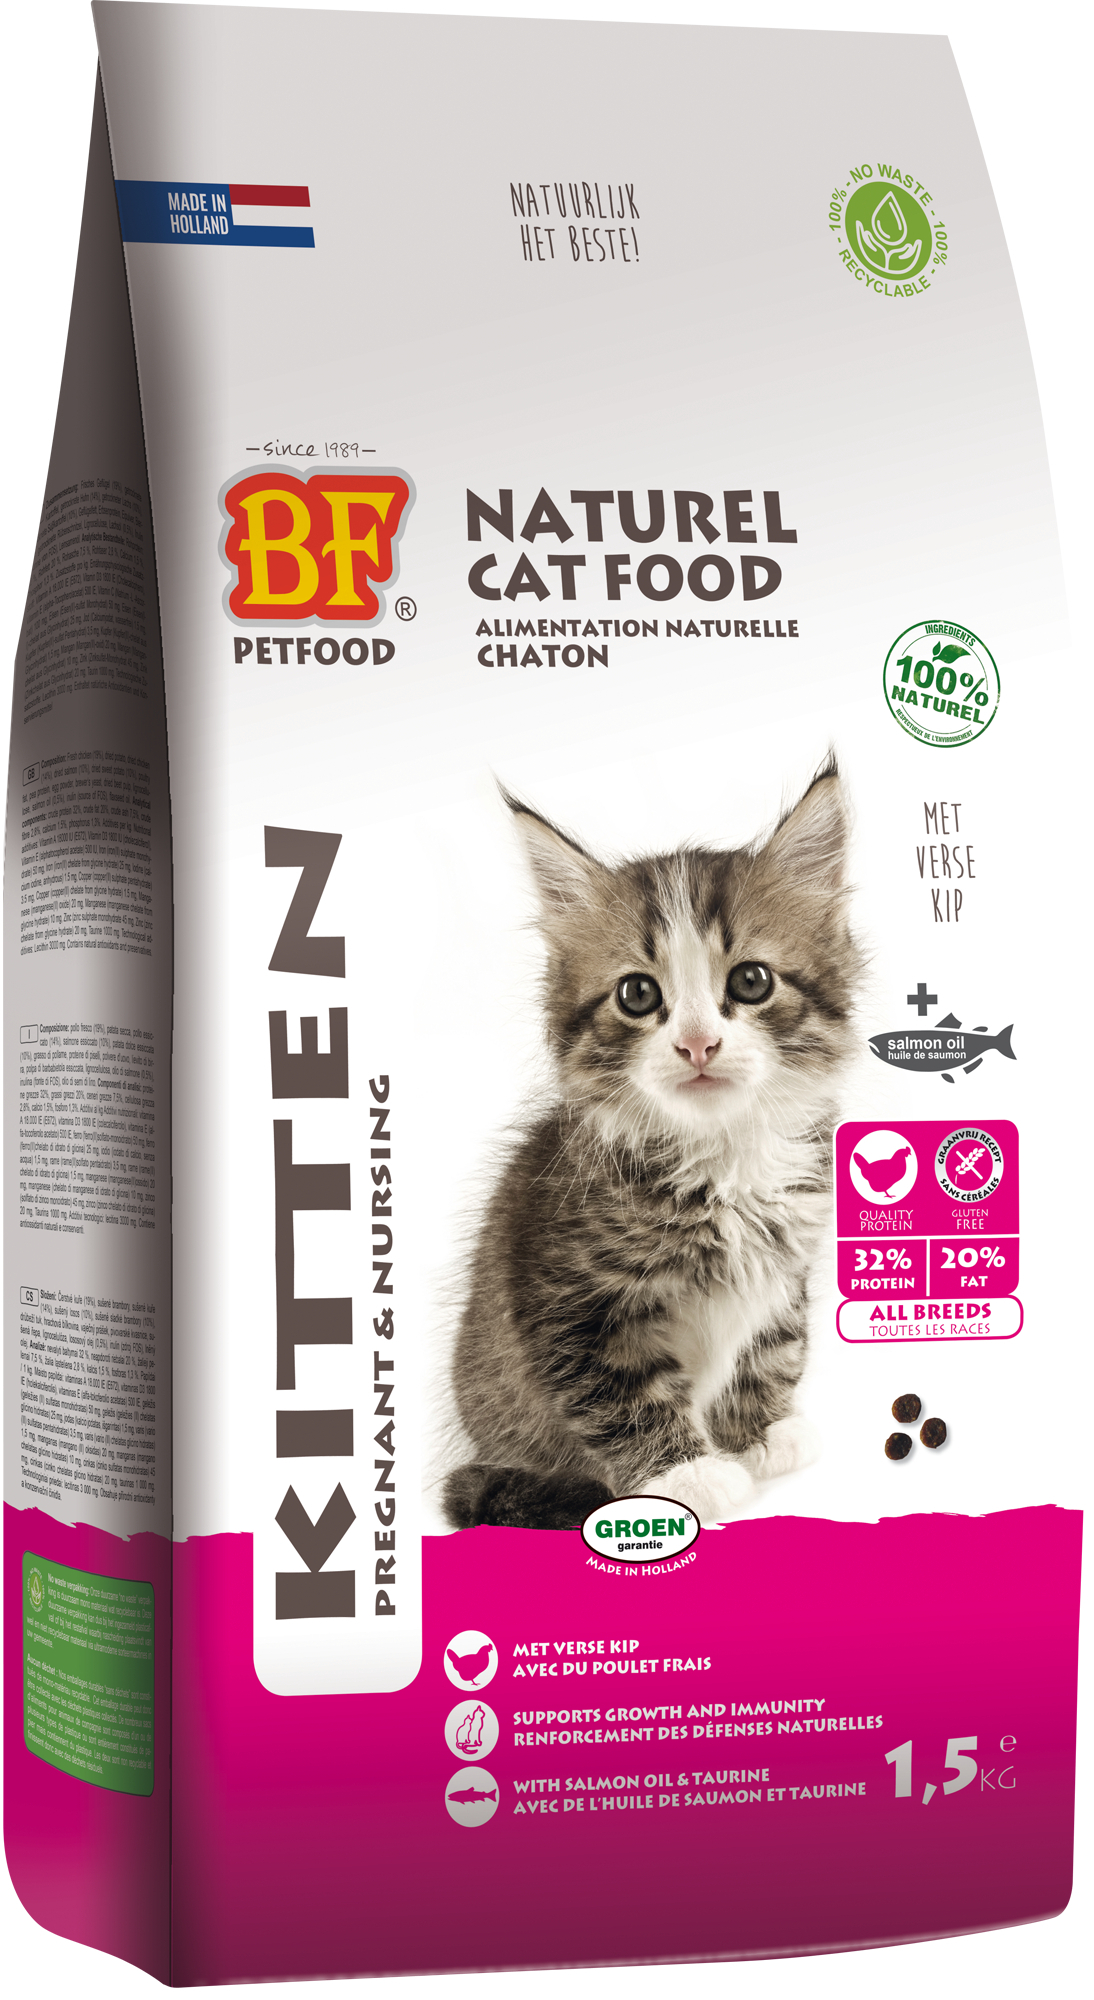 BIOFOOD Kitten Crocchette 100% Naturali al Tacchino per Gattini